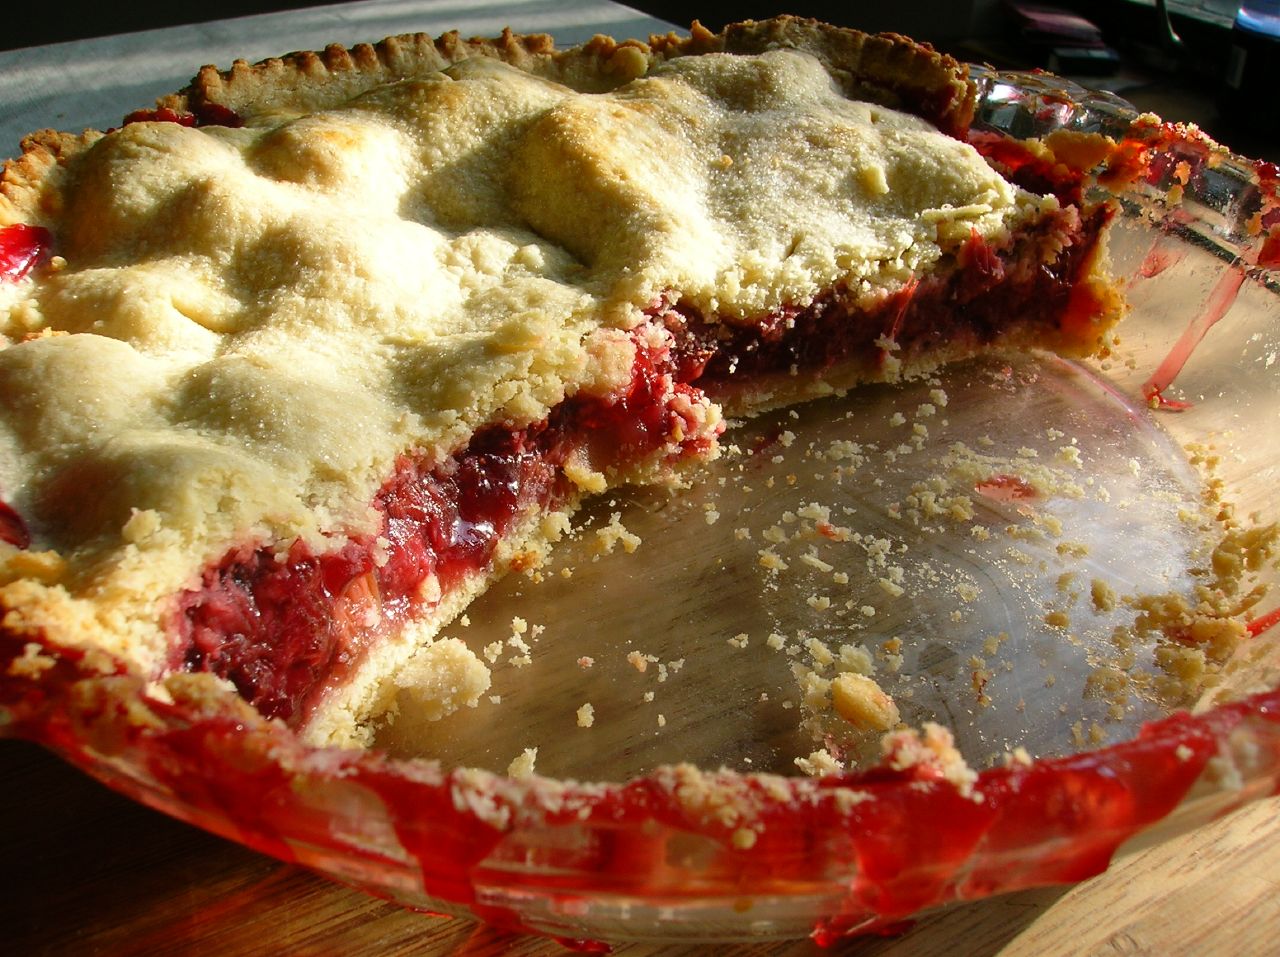 https://upload.wikimedia.org/wikipedia/commons/4/41/Strawberry_Rhubarb_Pie2.jpg